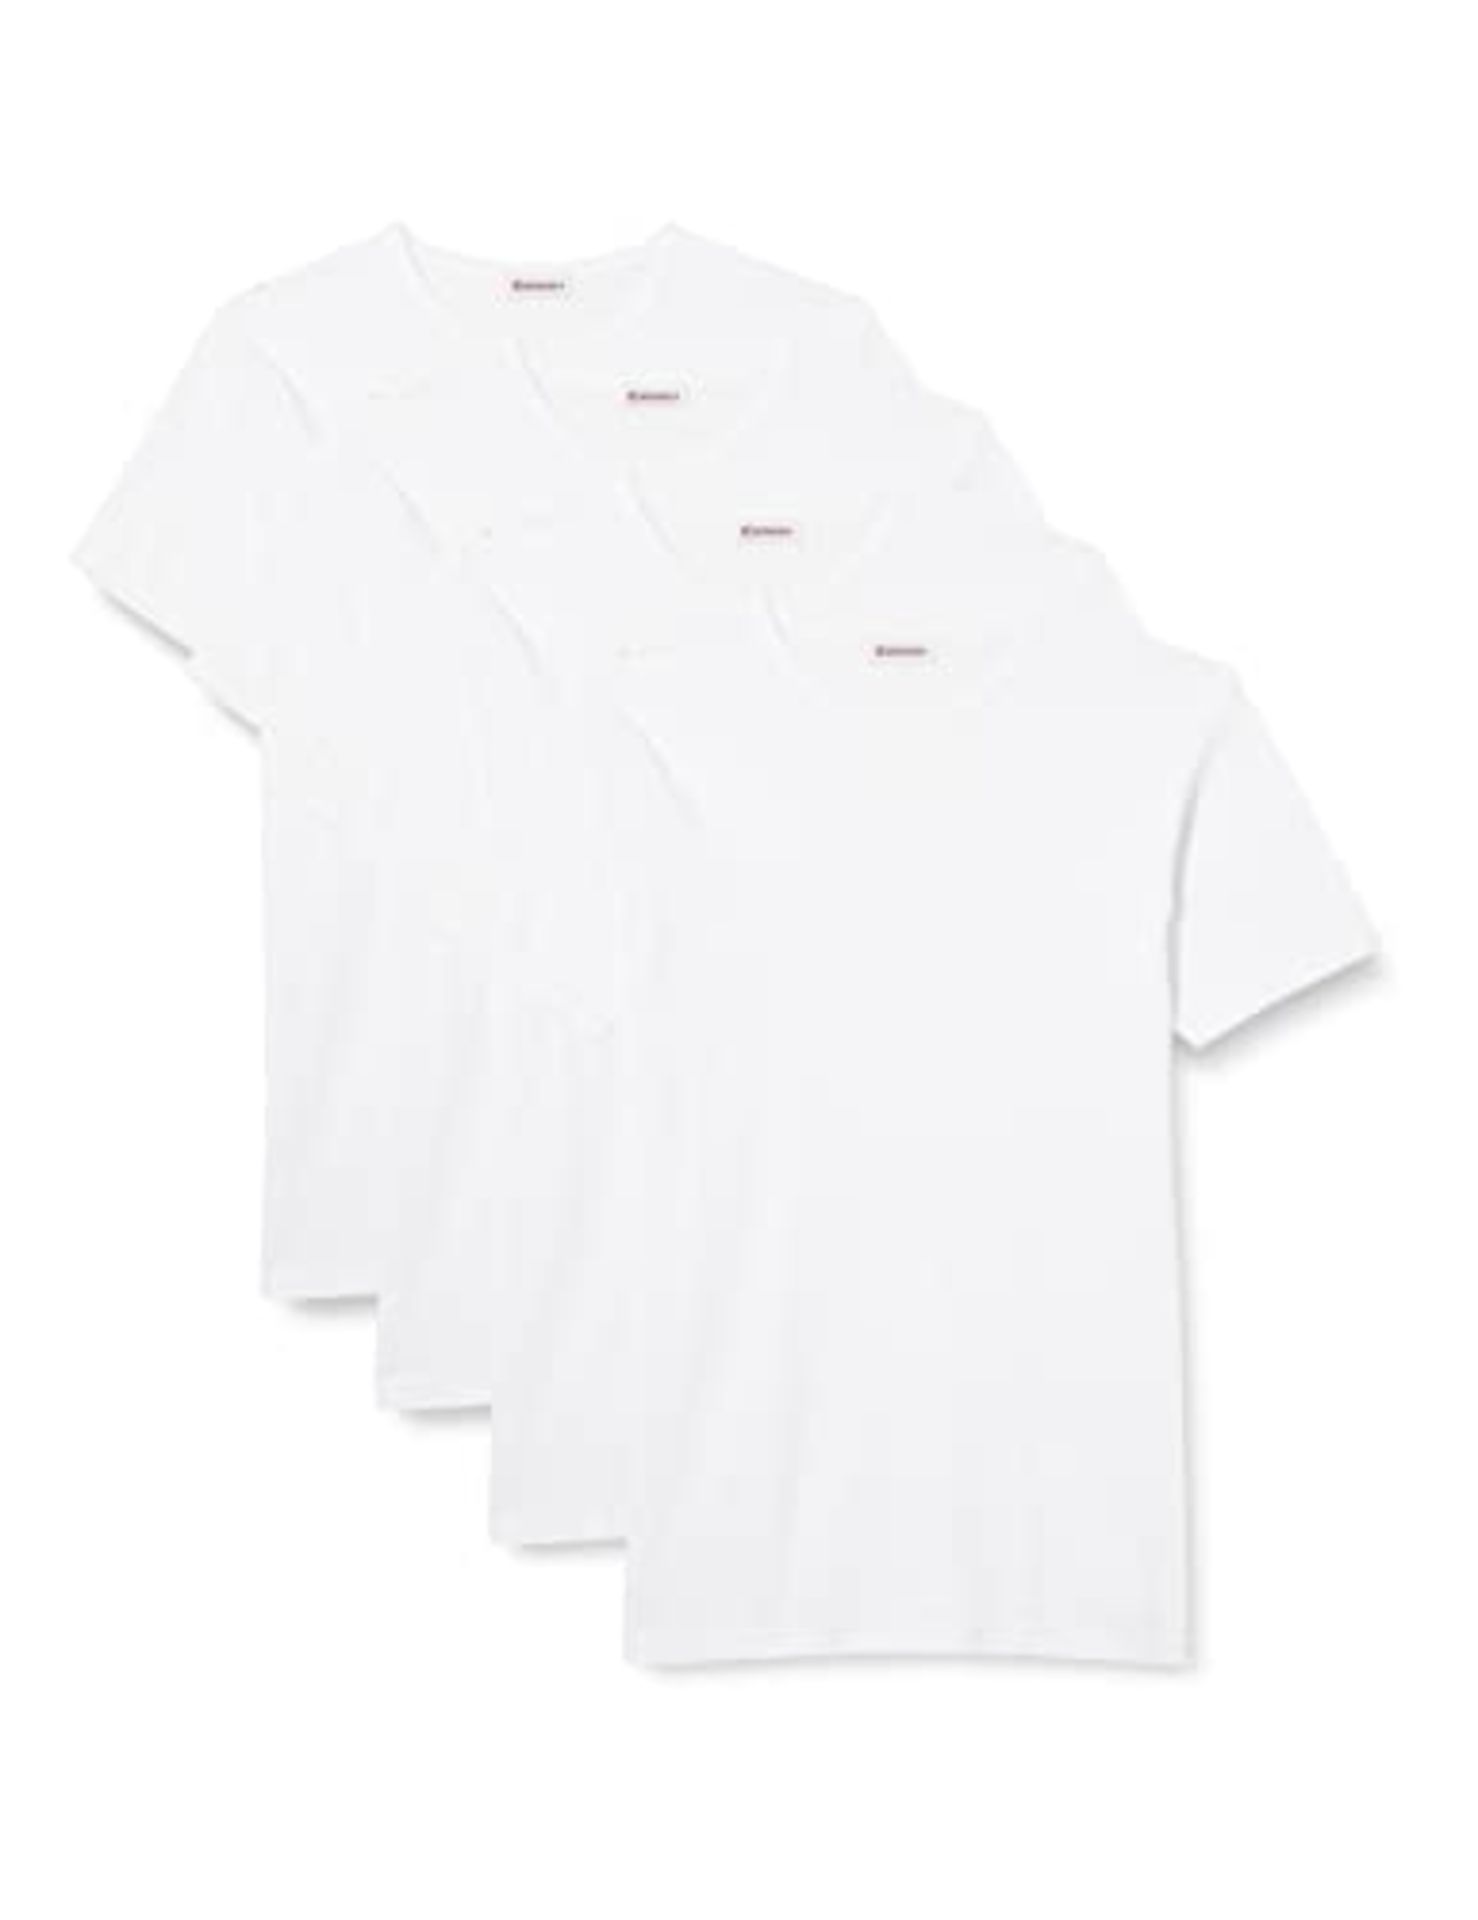 RRP £60.00 Eminence Men's Classic Promo Undershirt, White (Blanc/Blanc/Blanc/Blanc 0001), Size S